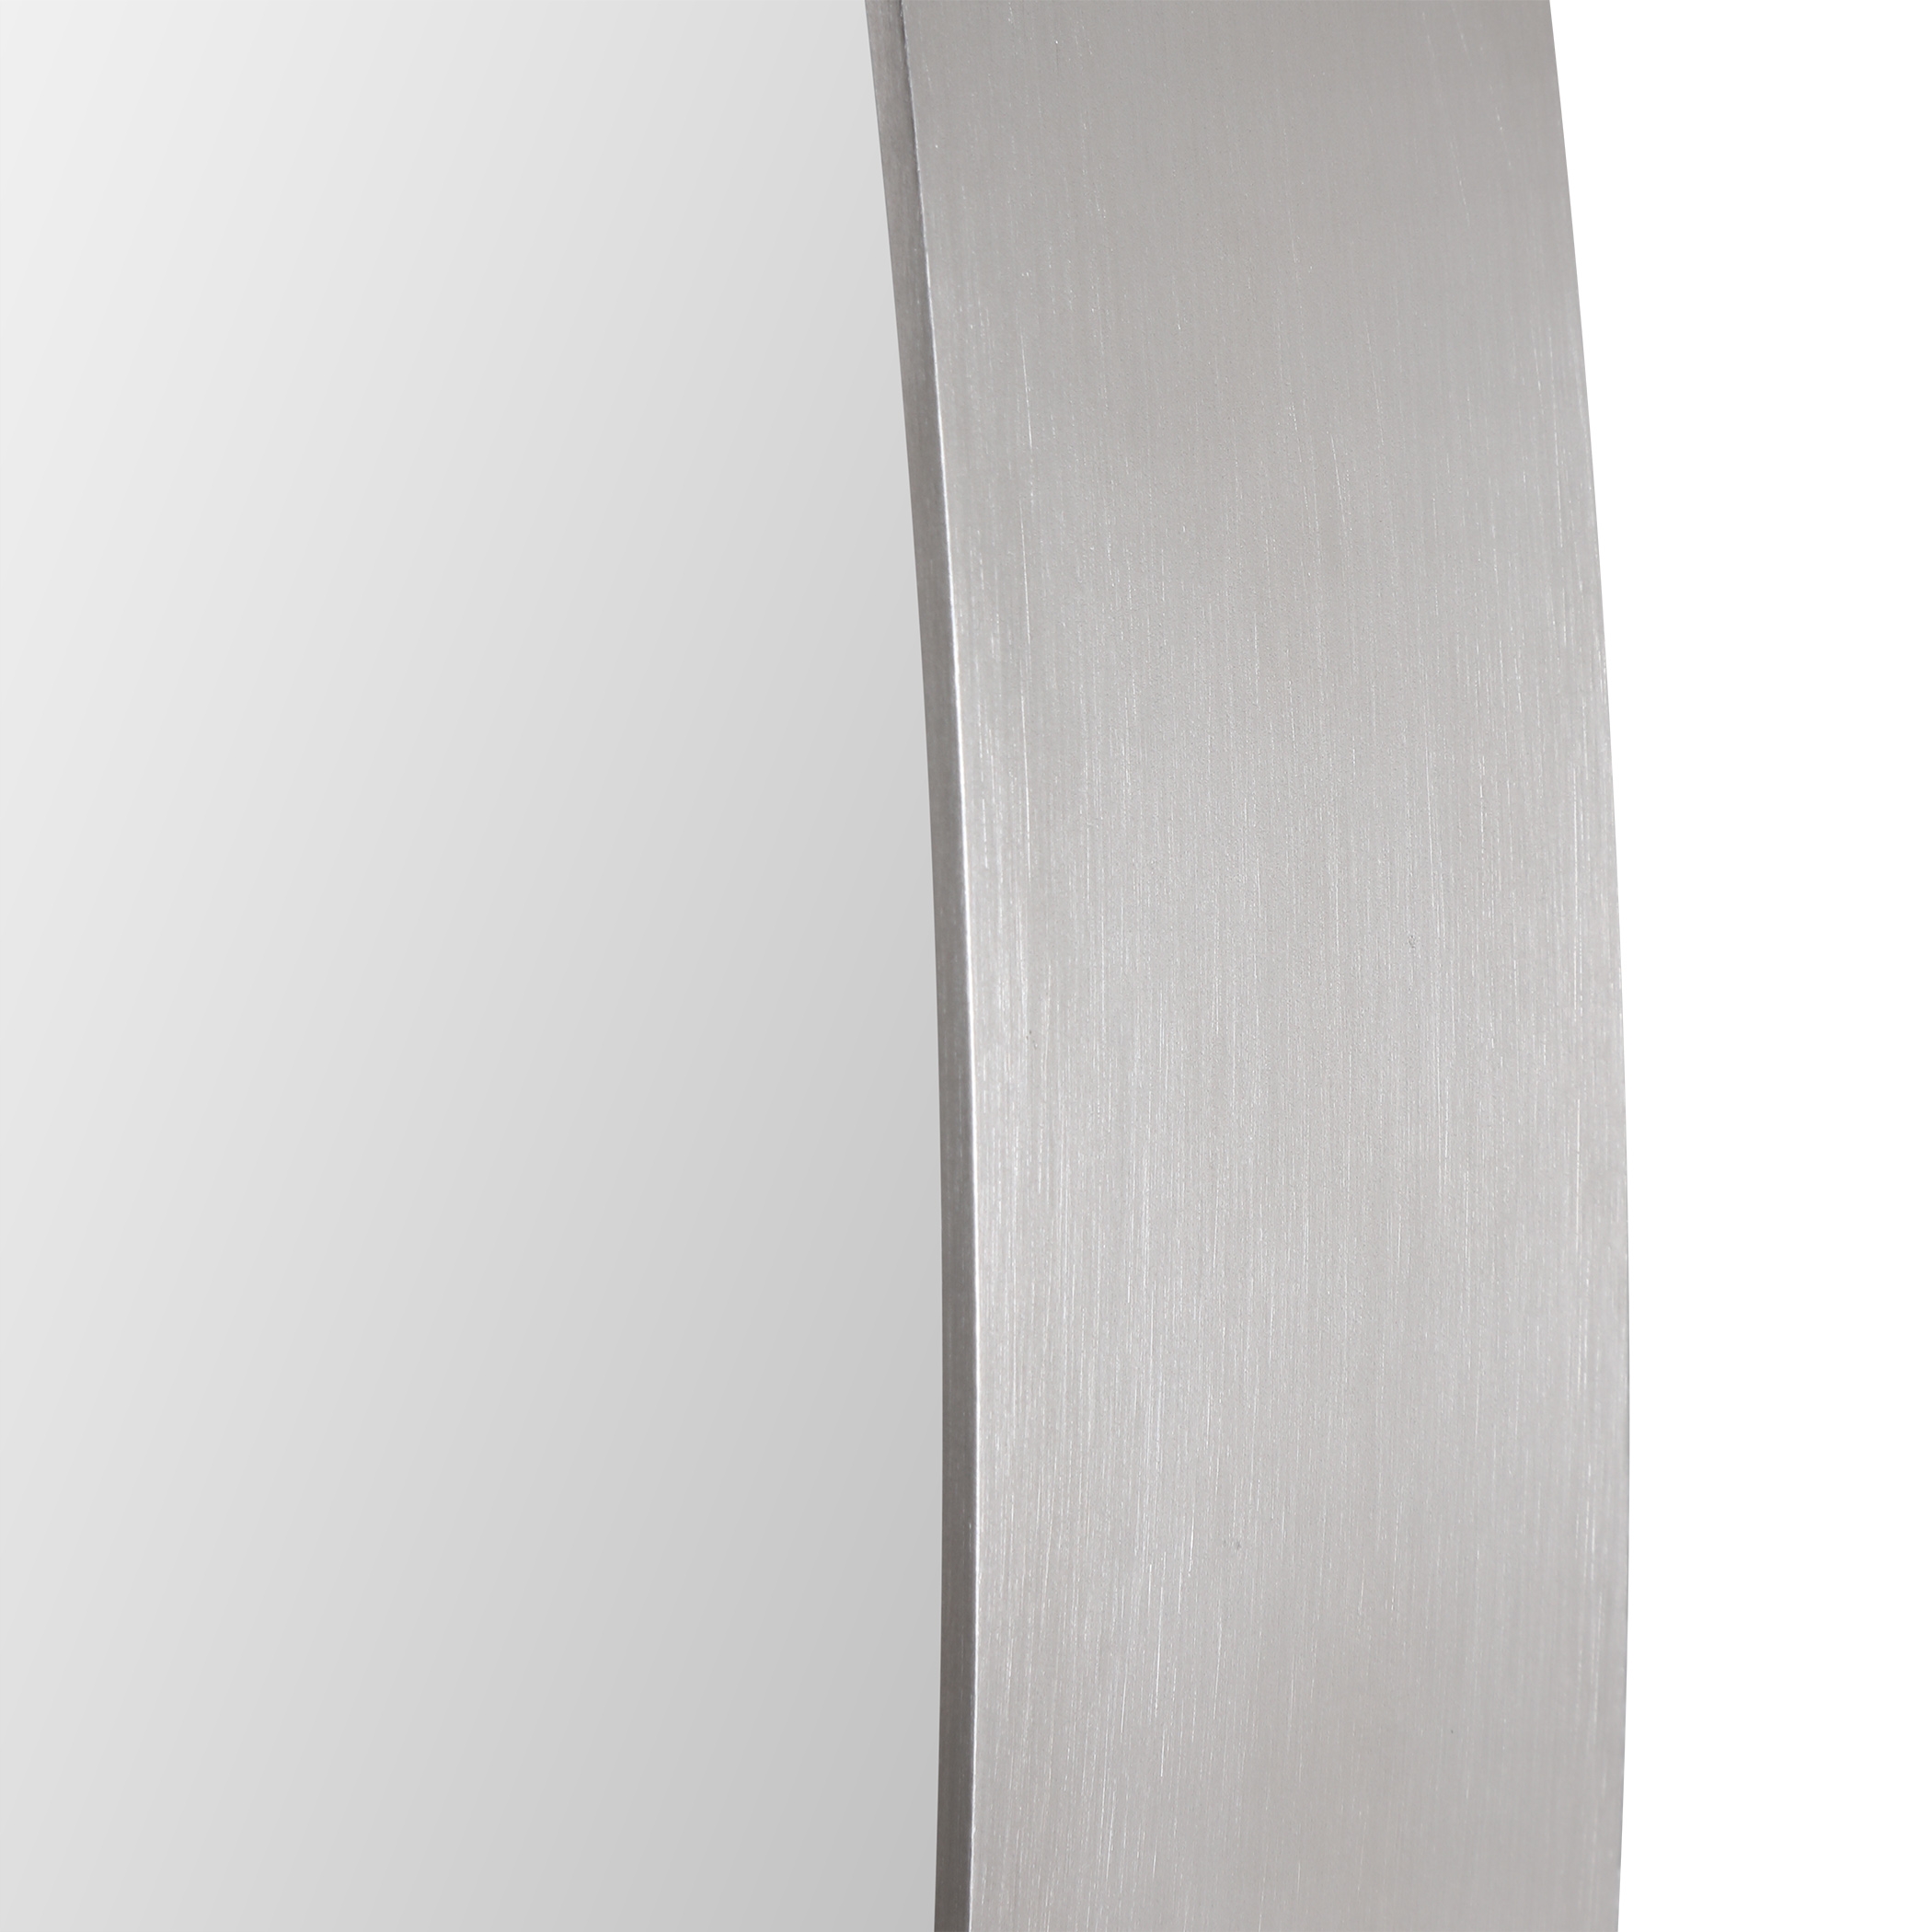 Pursley Brushed Nickel Oval Mirror - Image 1